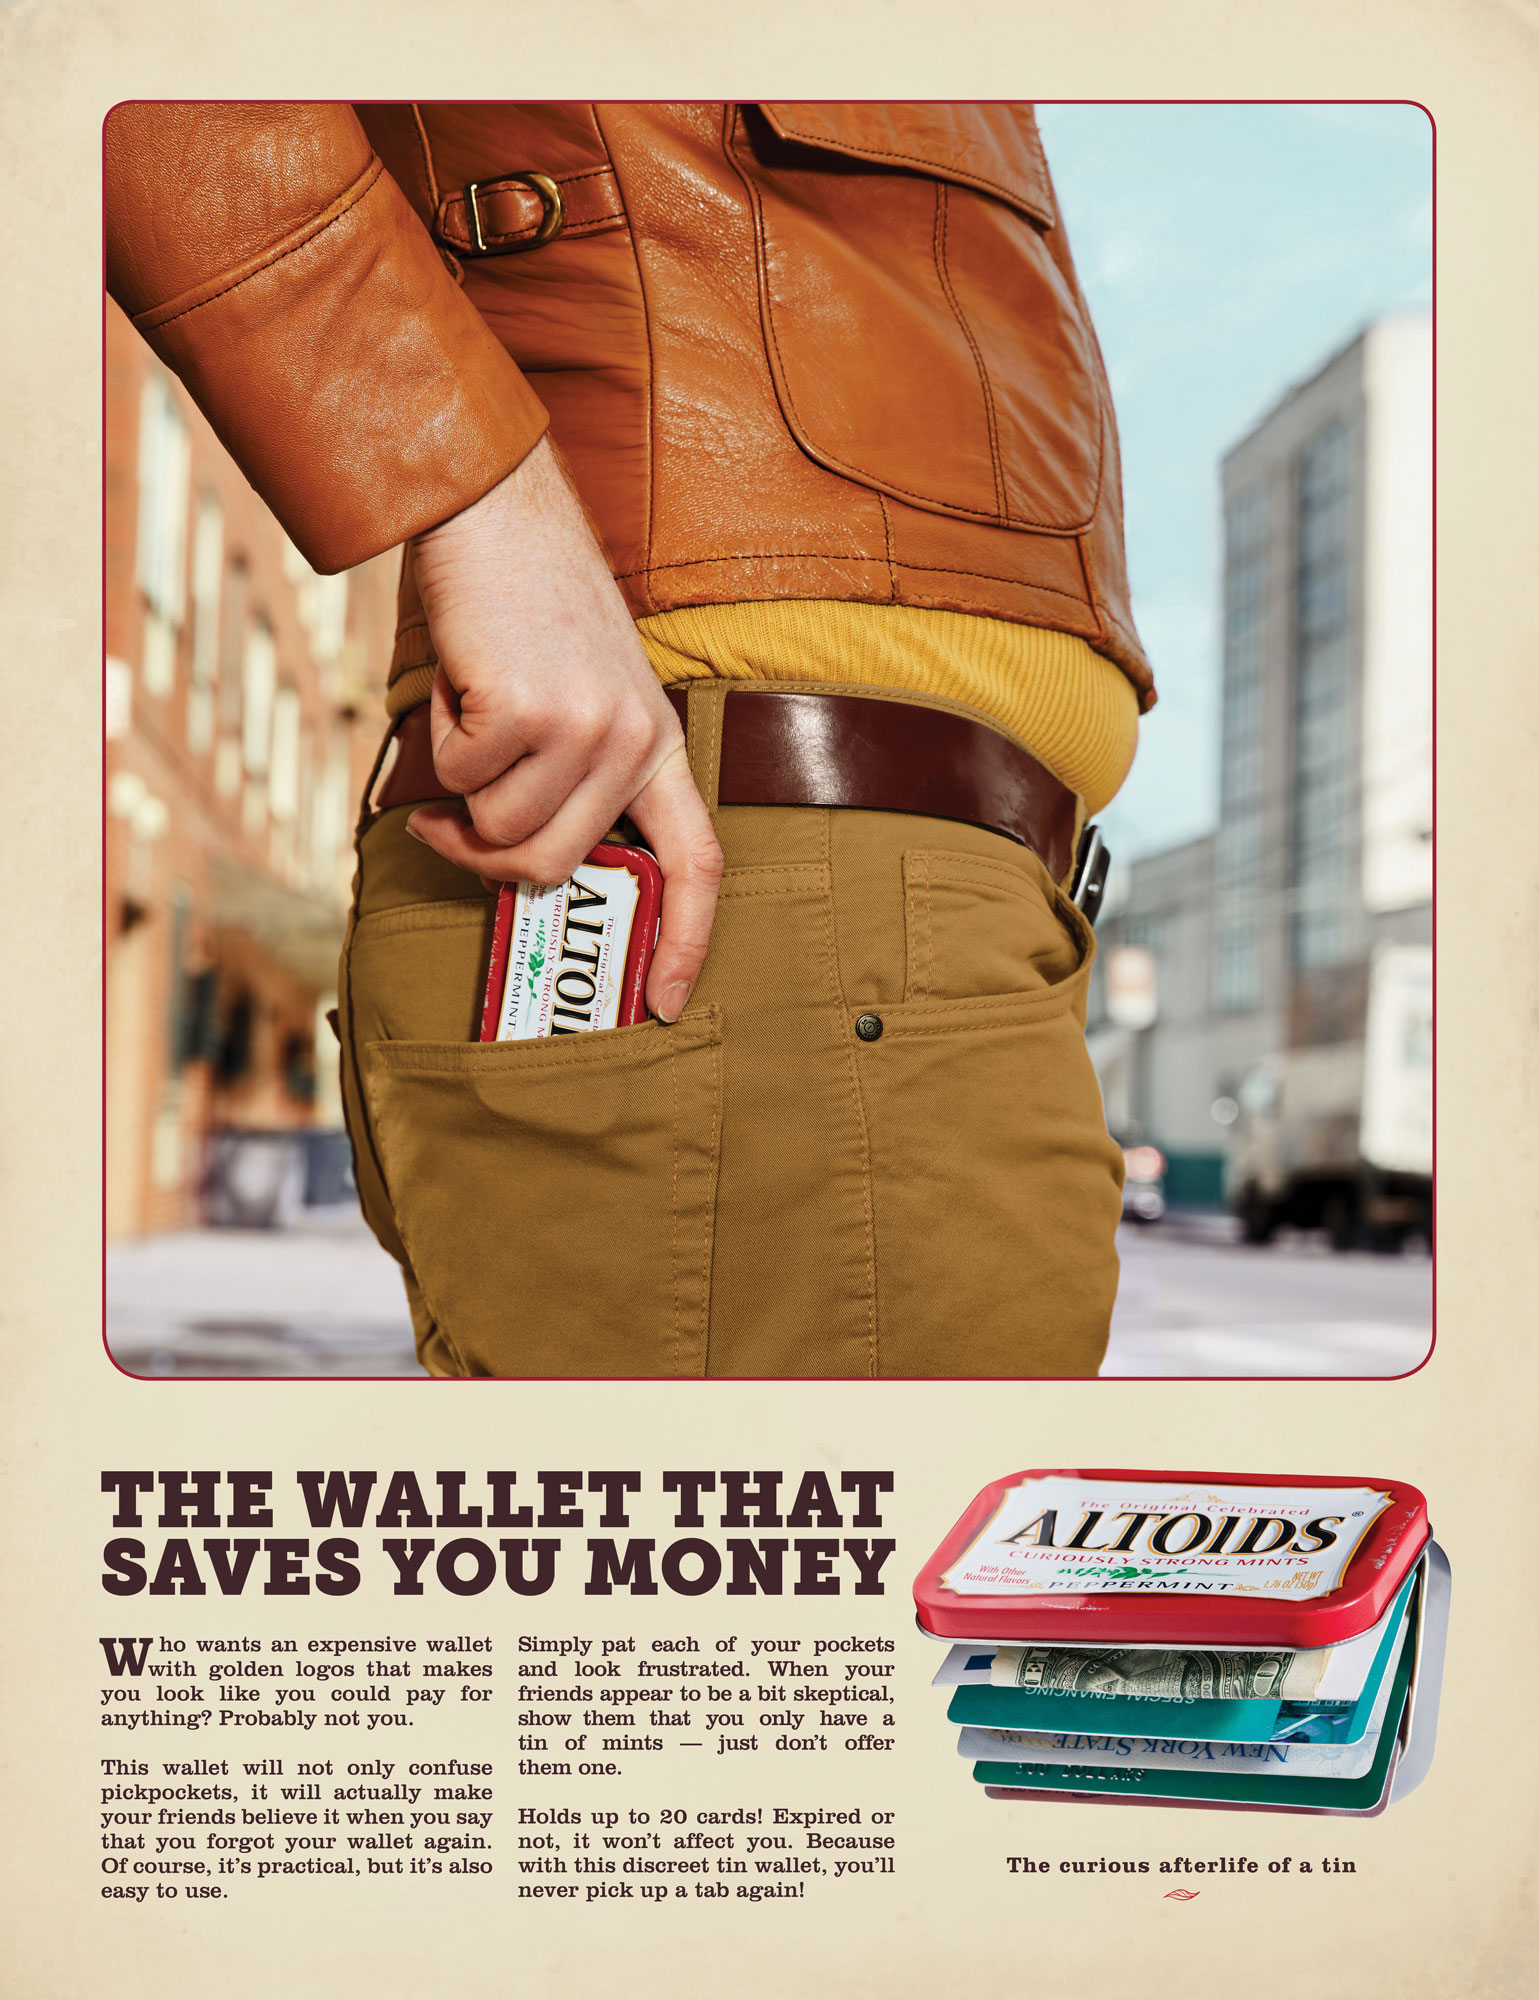 Altoids - The Wallet